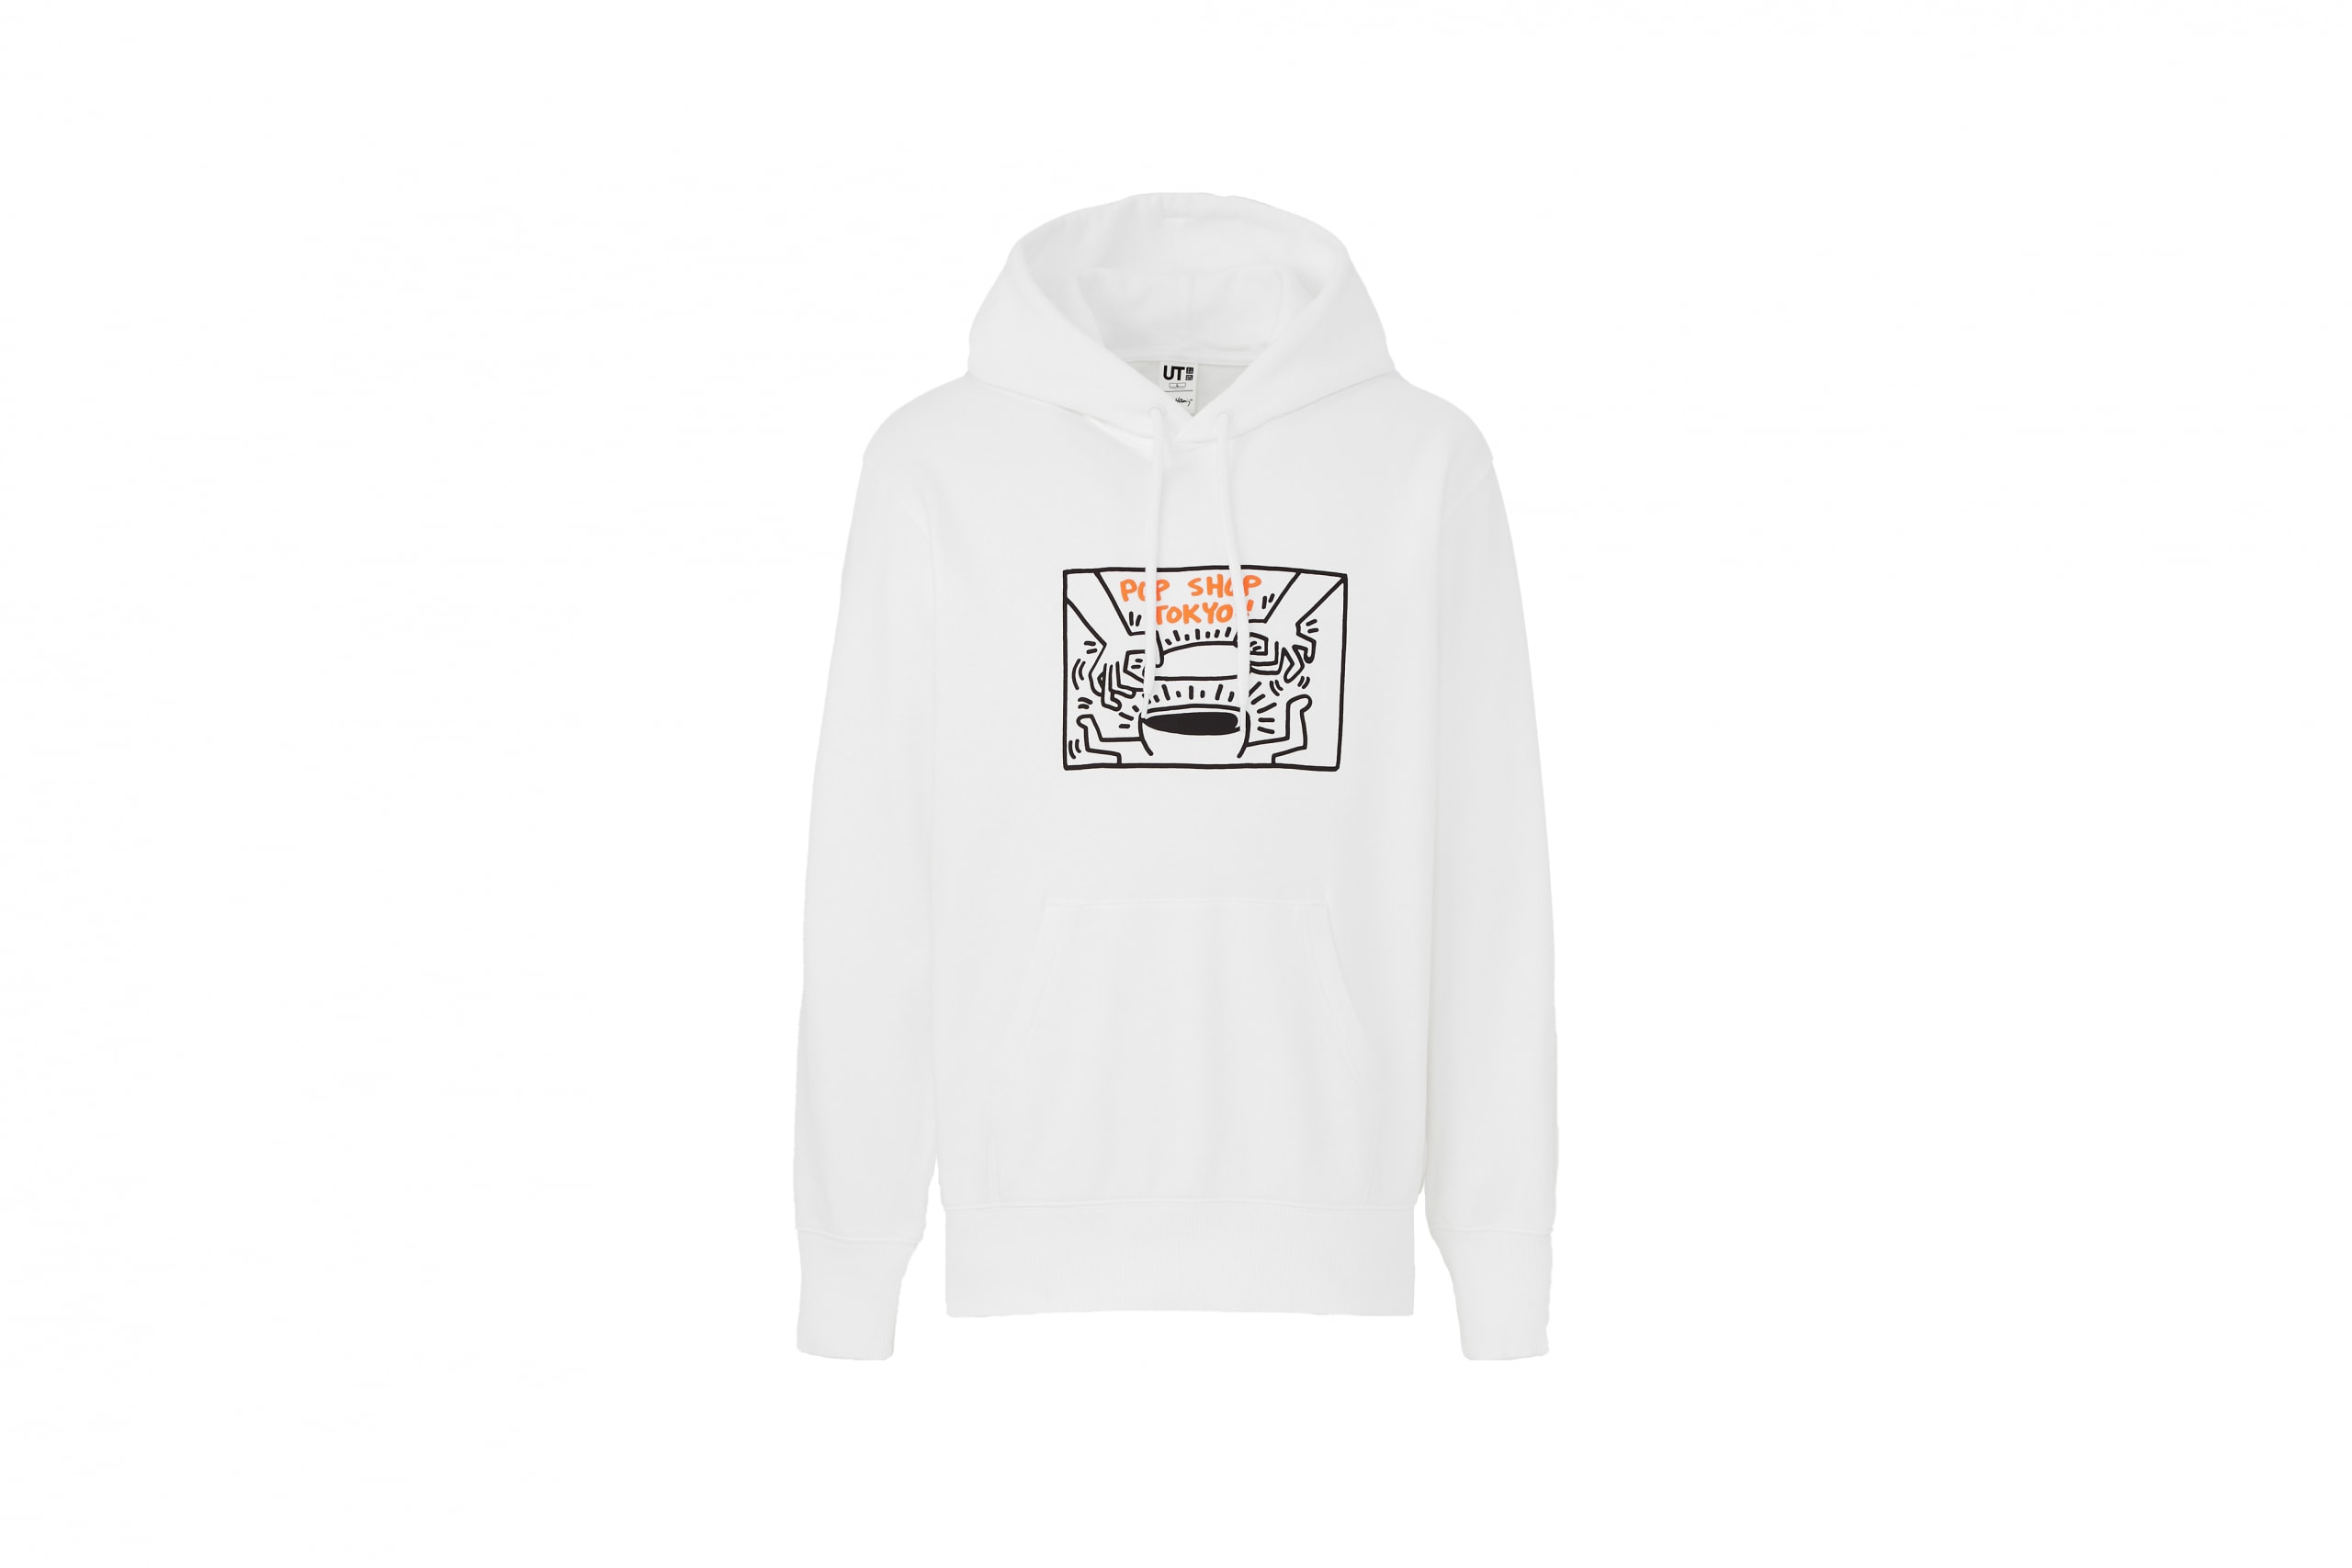 keith haring uniqlo collaboration hoodies white pop shop tokyo